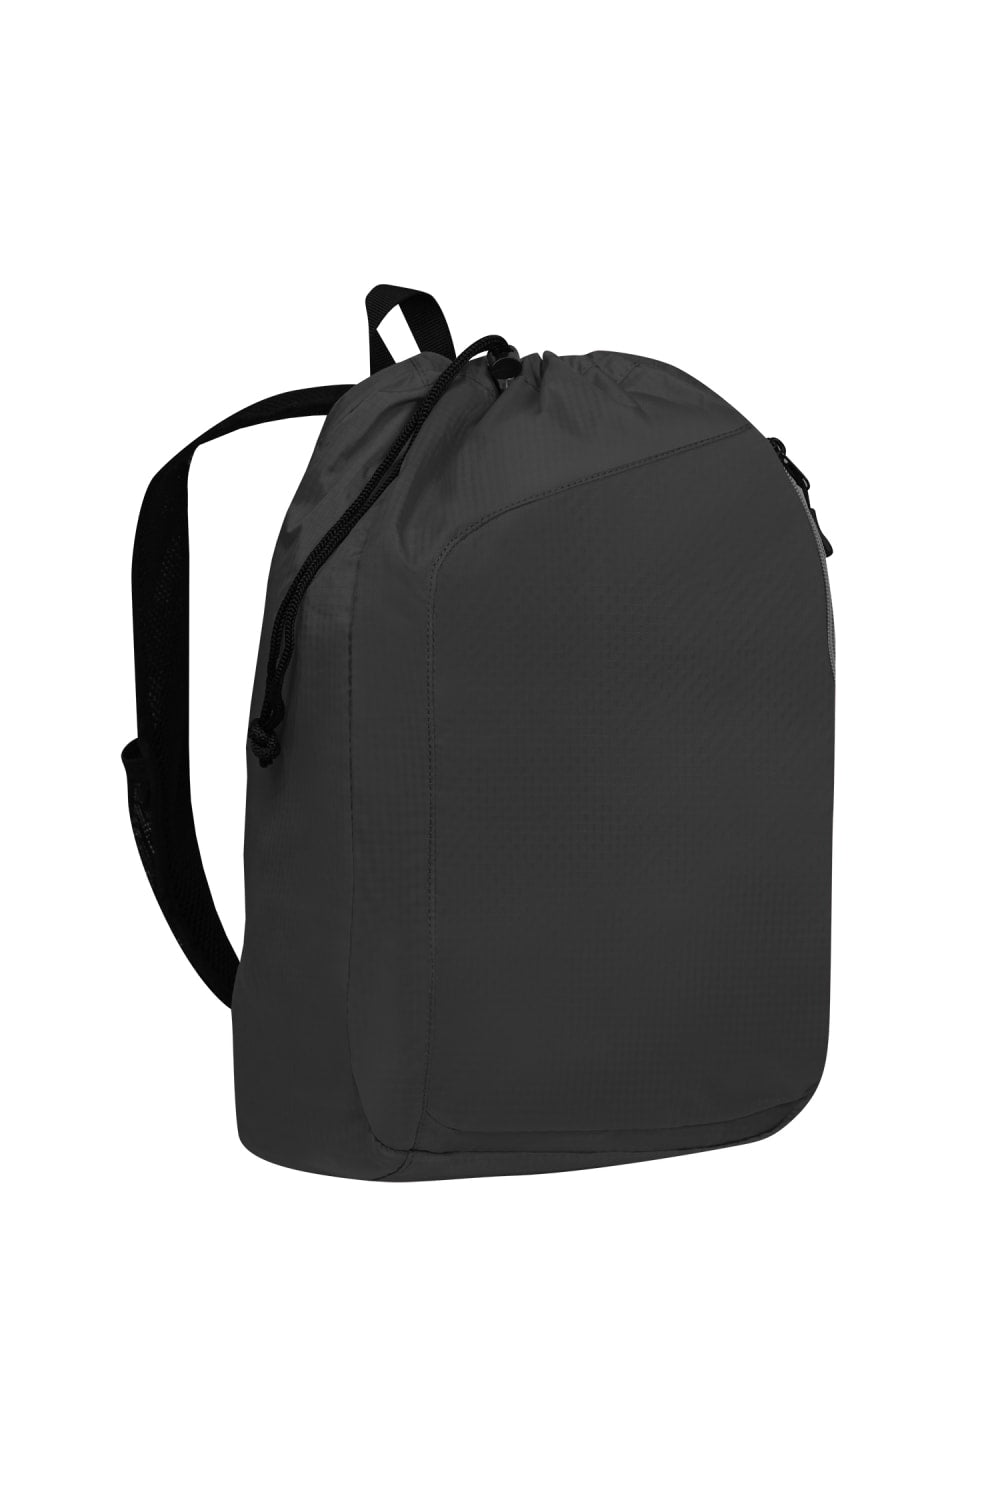 Ogio Endurance Sonic Single Strap Backpack / Rucksack (Black) (One Size)